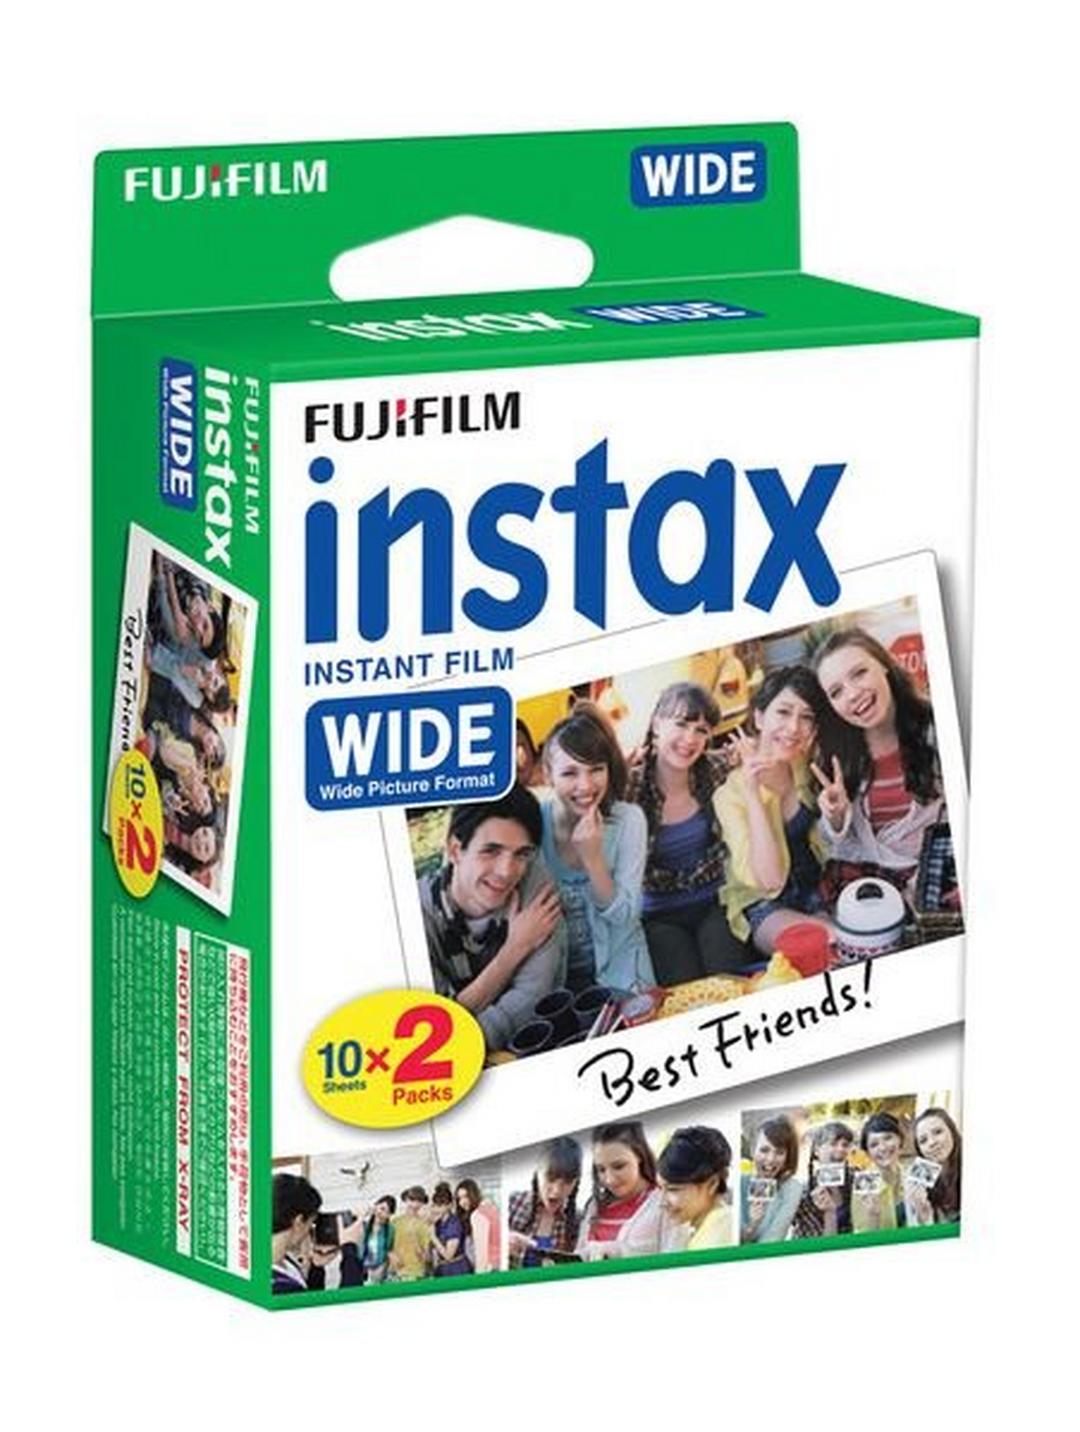 Fujifilm Instax Wide Instant Film - 2 Pack x 10 prints